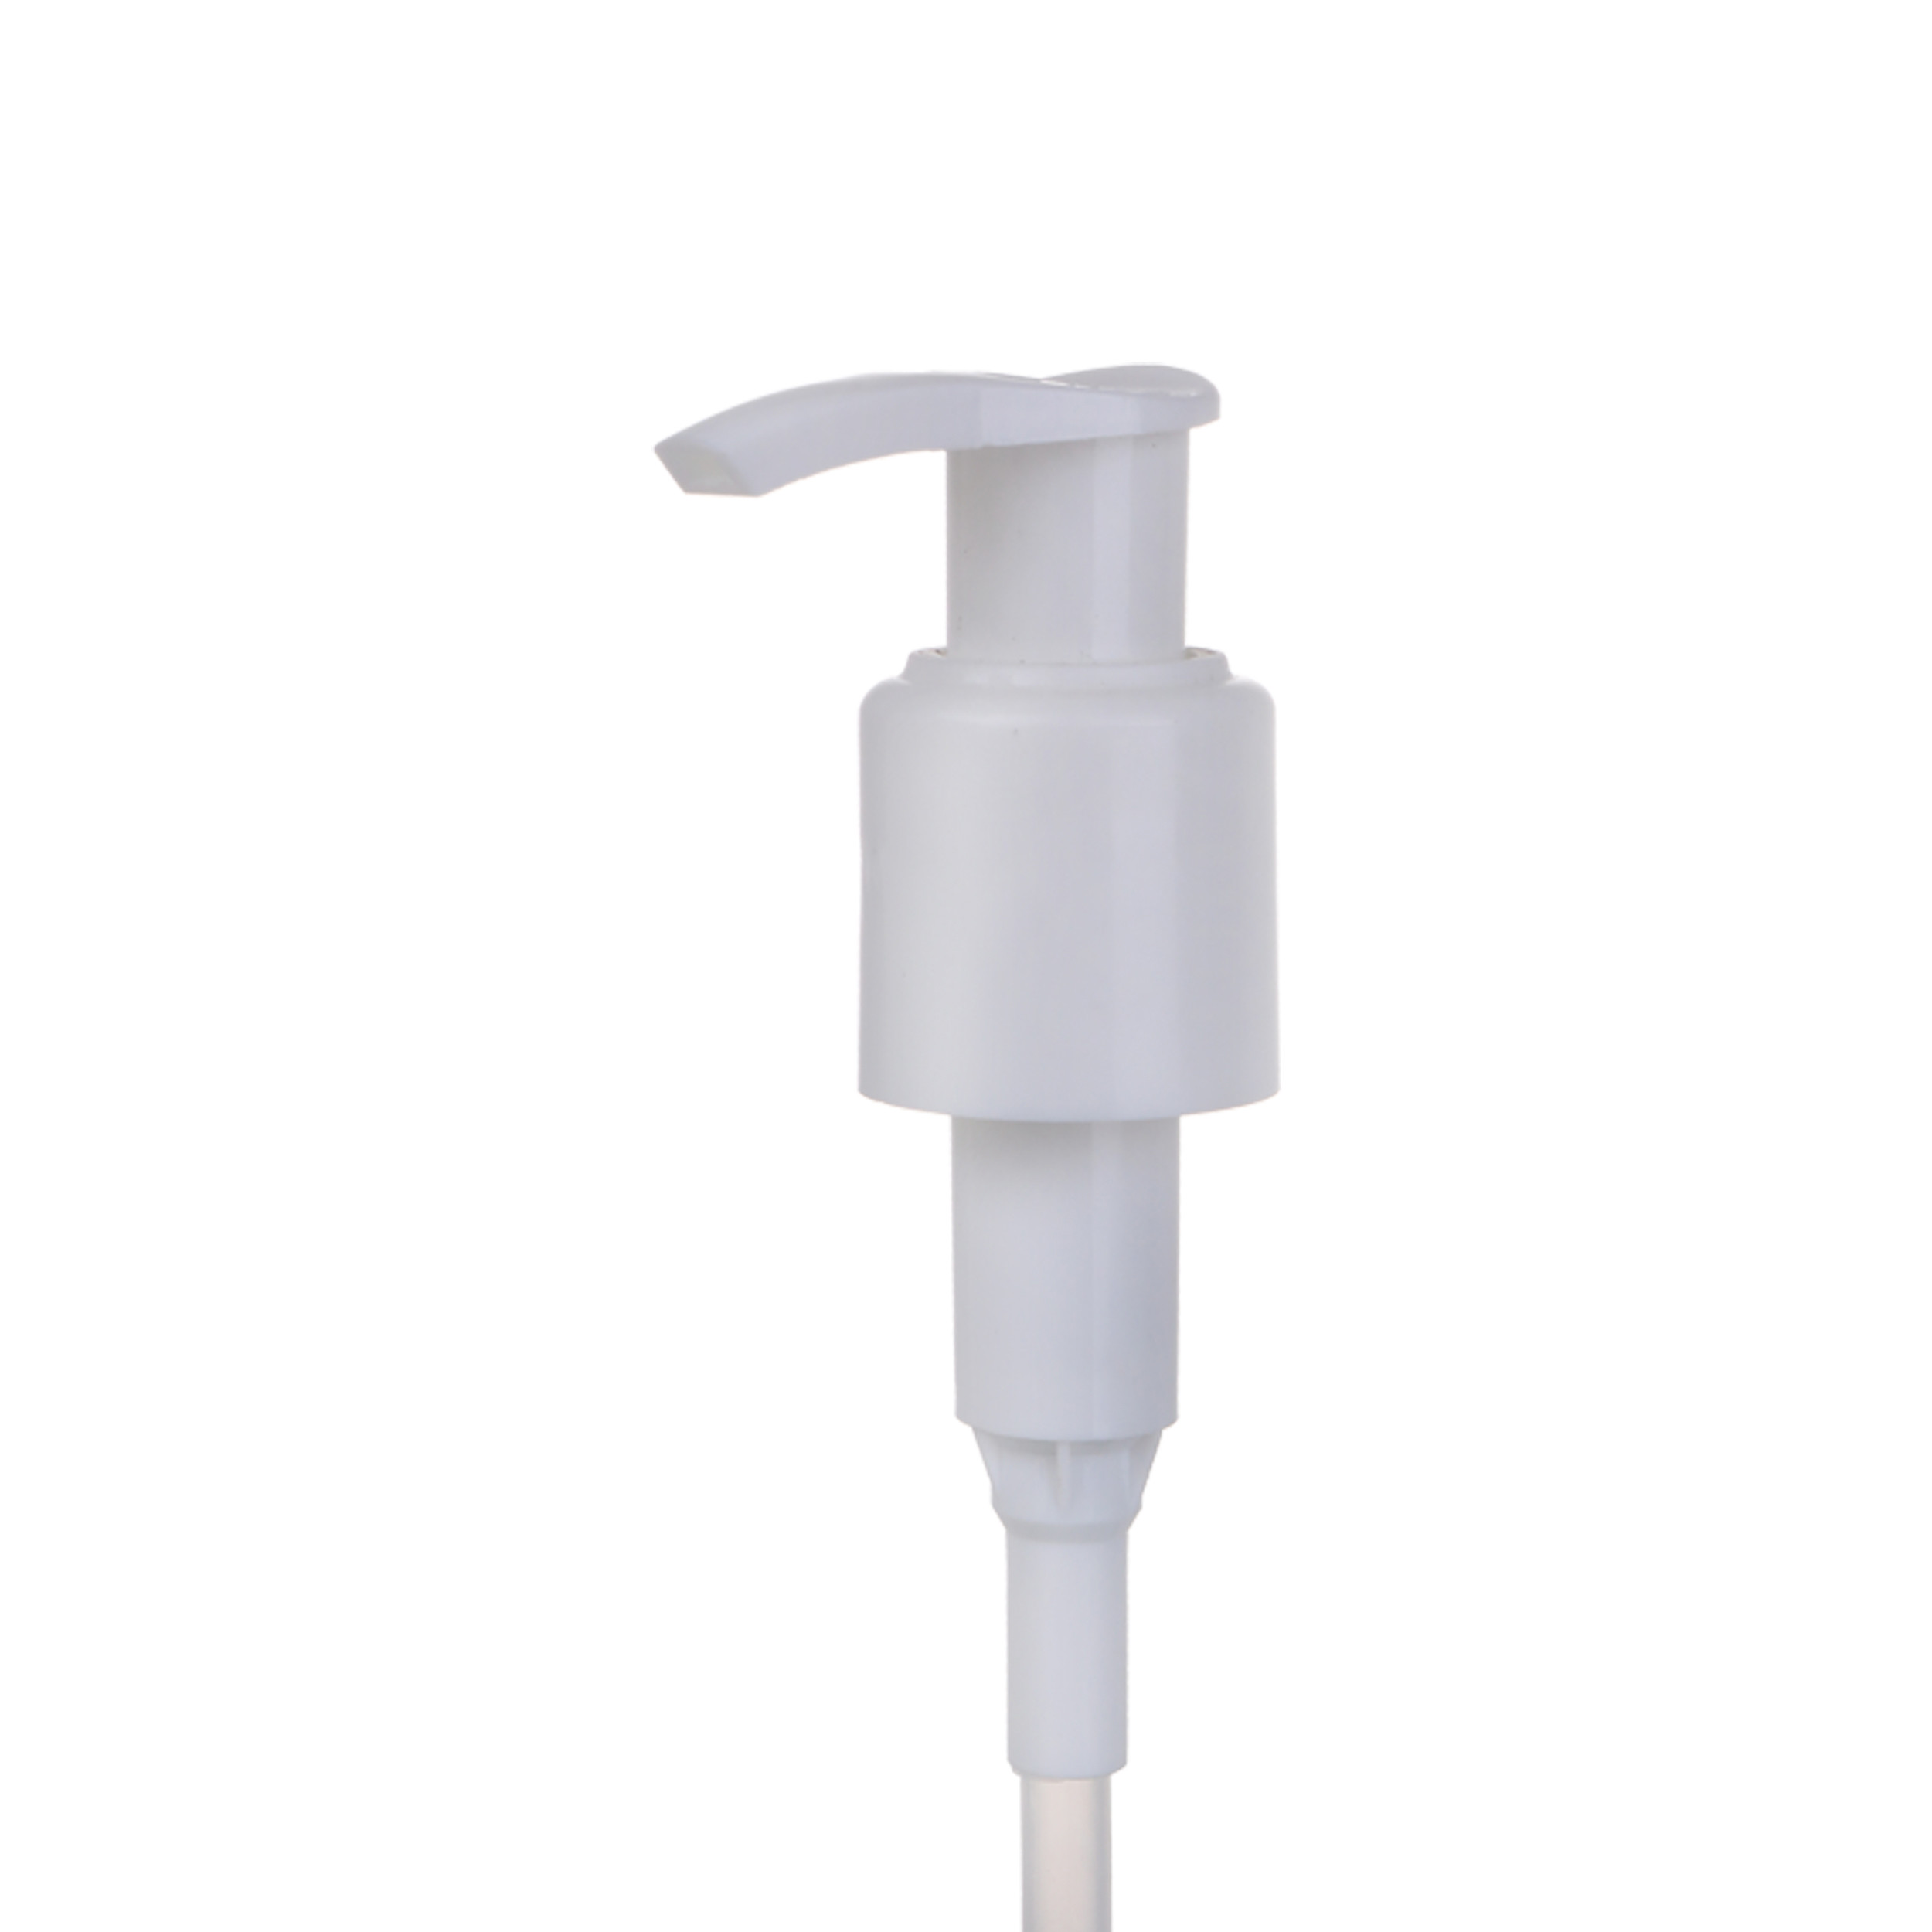  In Stock White Plastic Pump Dispenser 24/415 Treatment Pump For Serum Lotion Manufactures